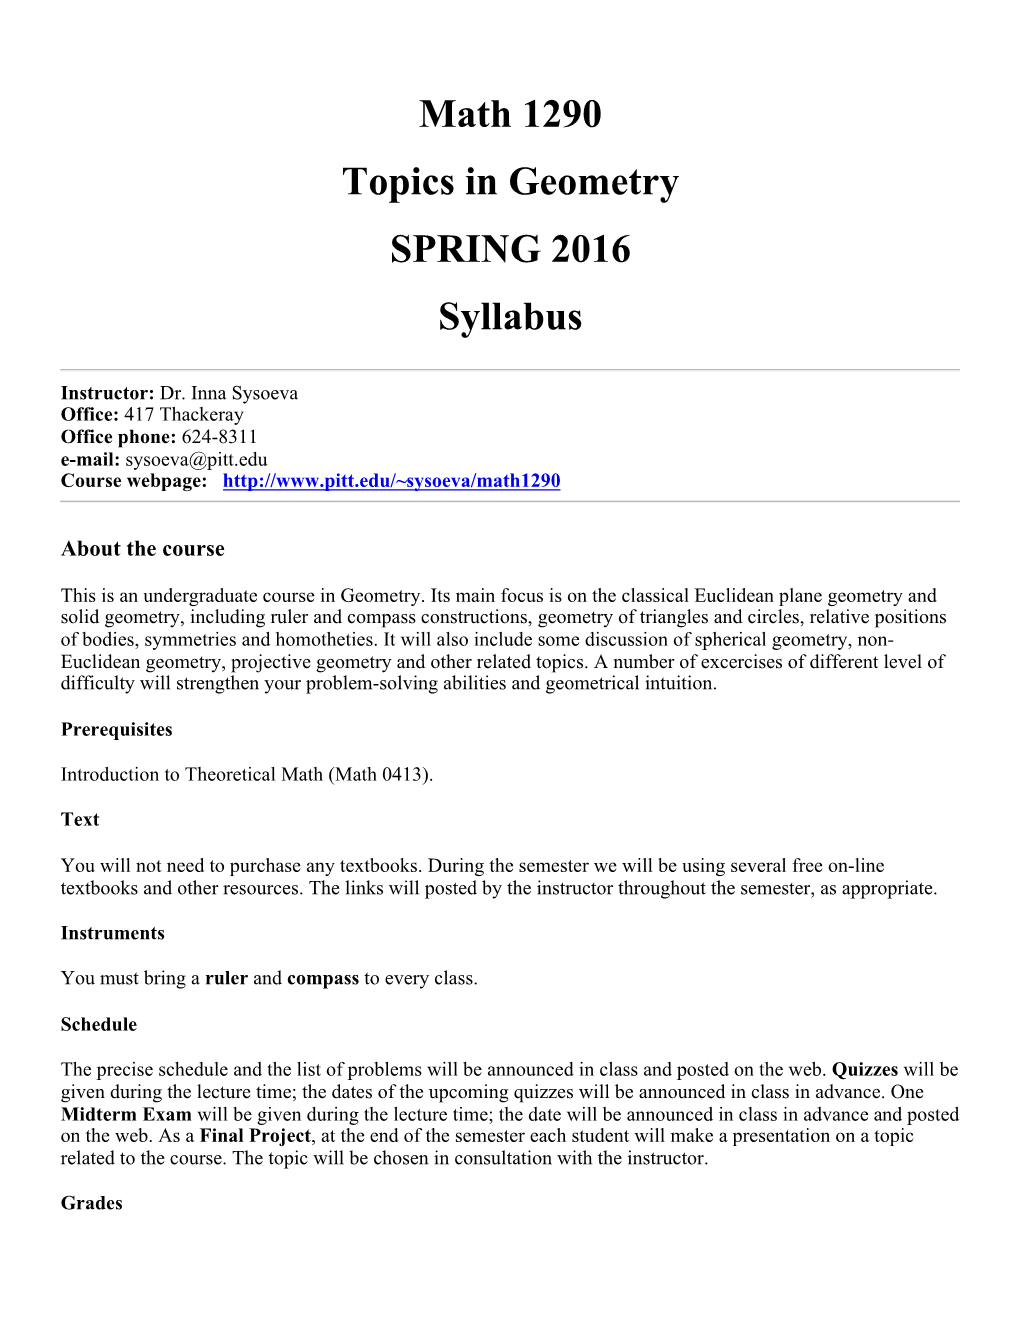 Math 1290 Topics in Geometry SPRING 2016 Syllabus